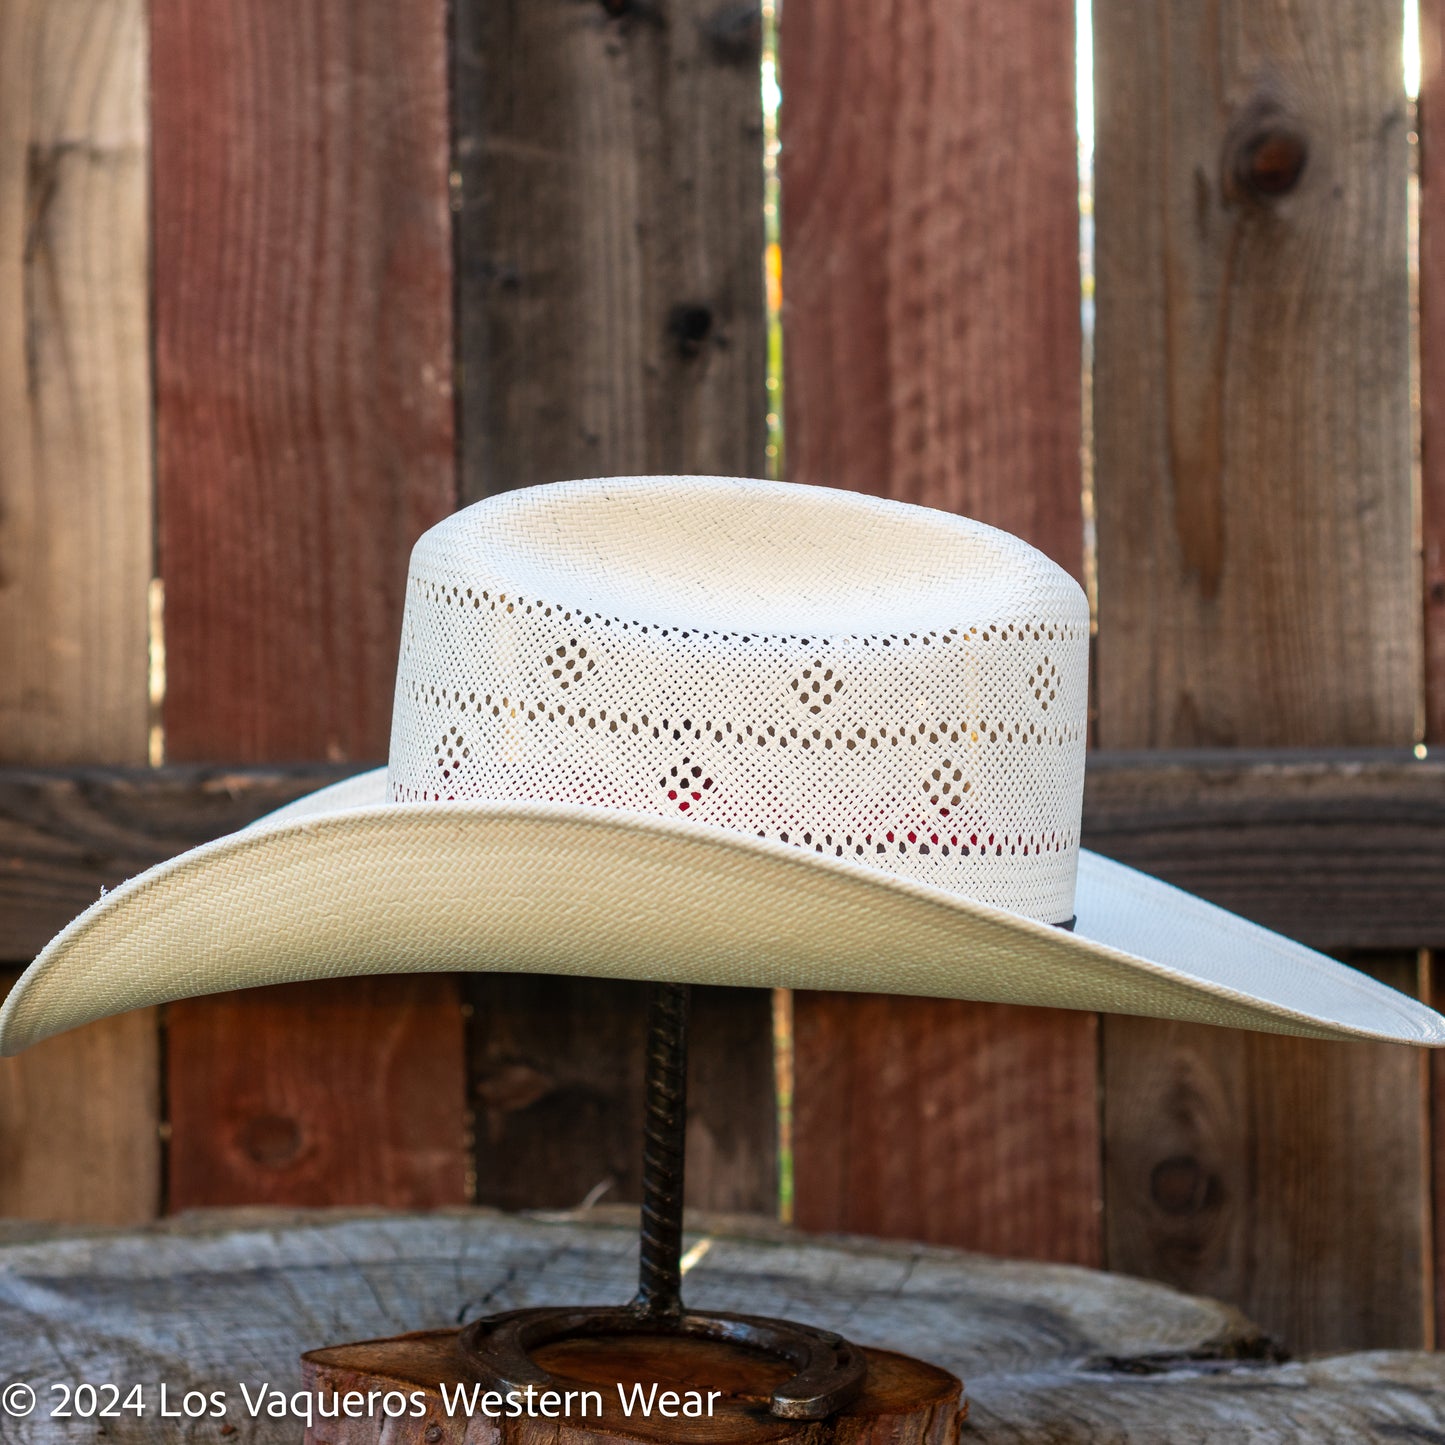 Resistol 20x Ryker Cowboy Hat Straw Hat Natural